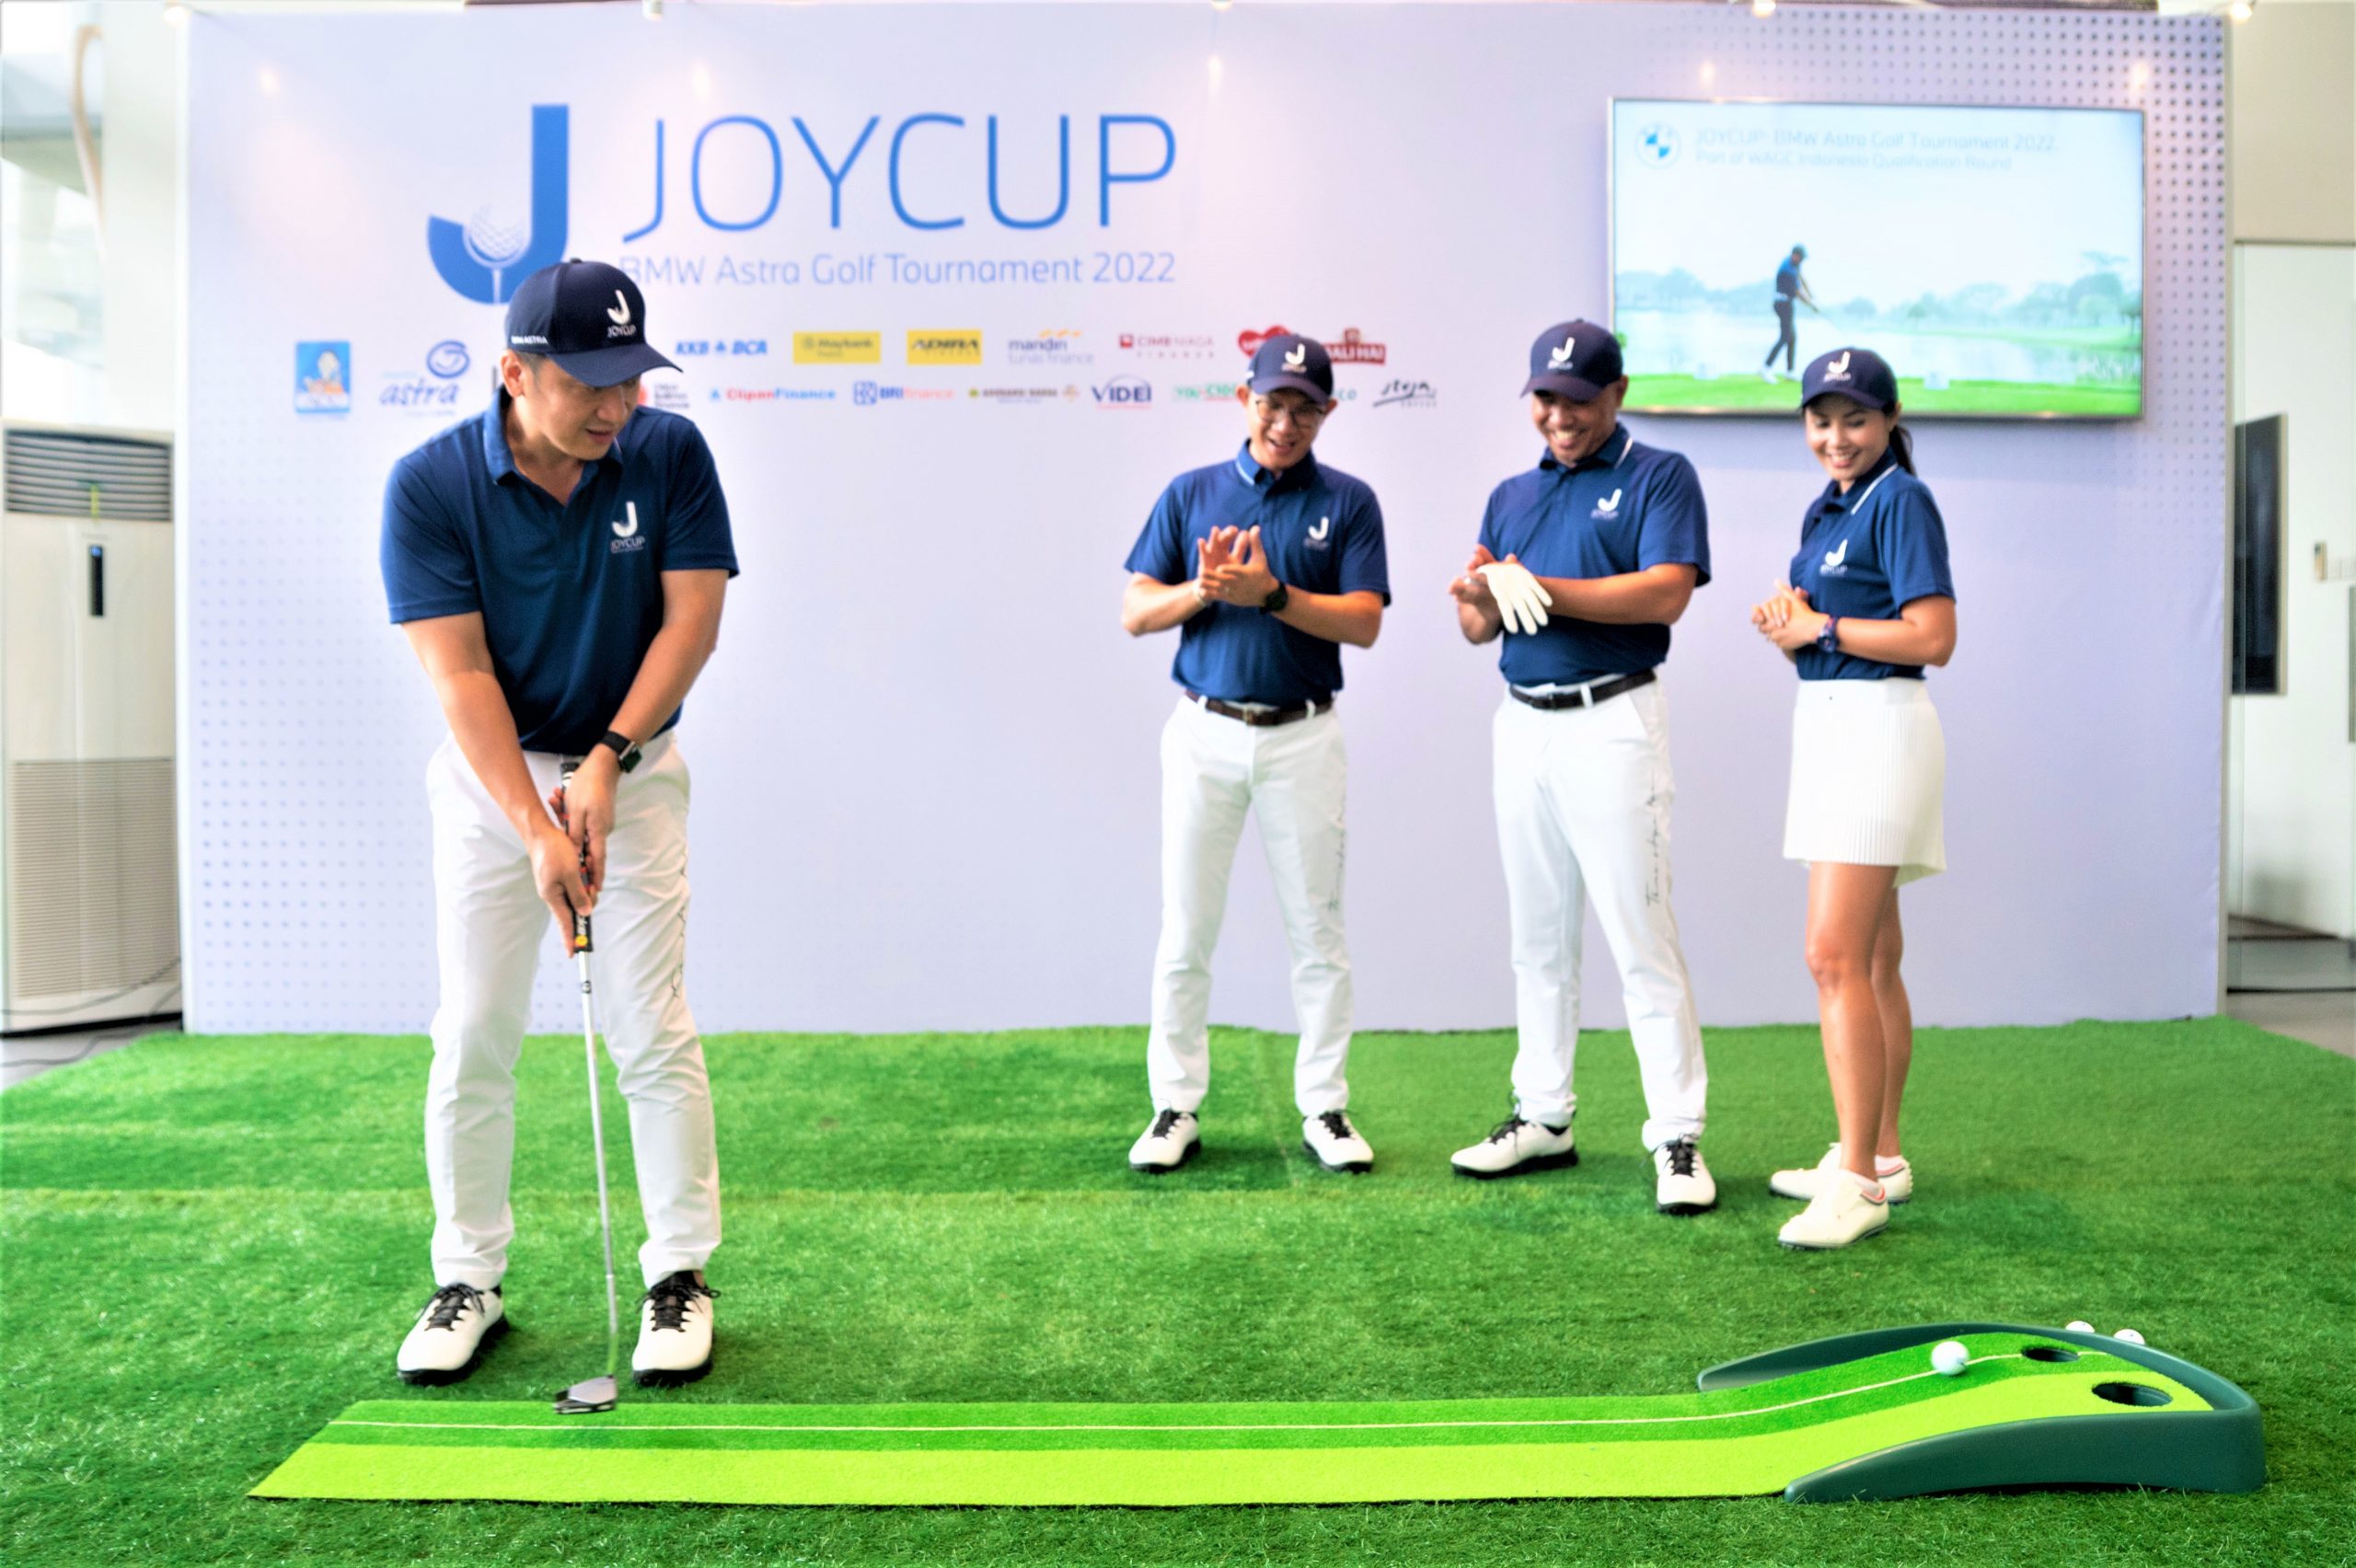 Turnamen Golf Joycup 2022 Diikuti Pegolf Dari Mancanegara